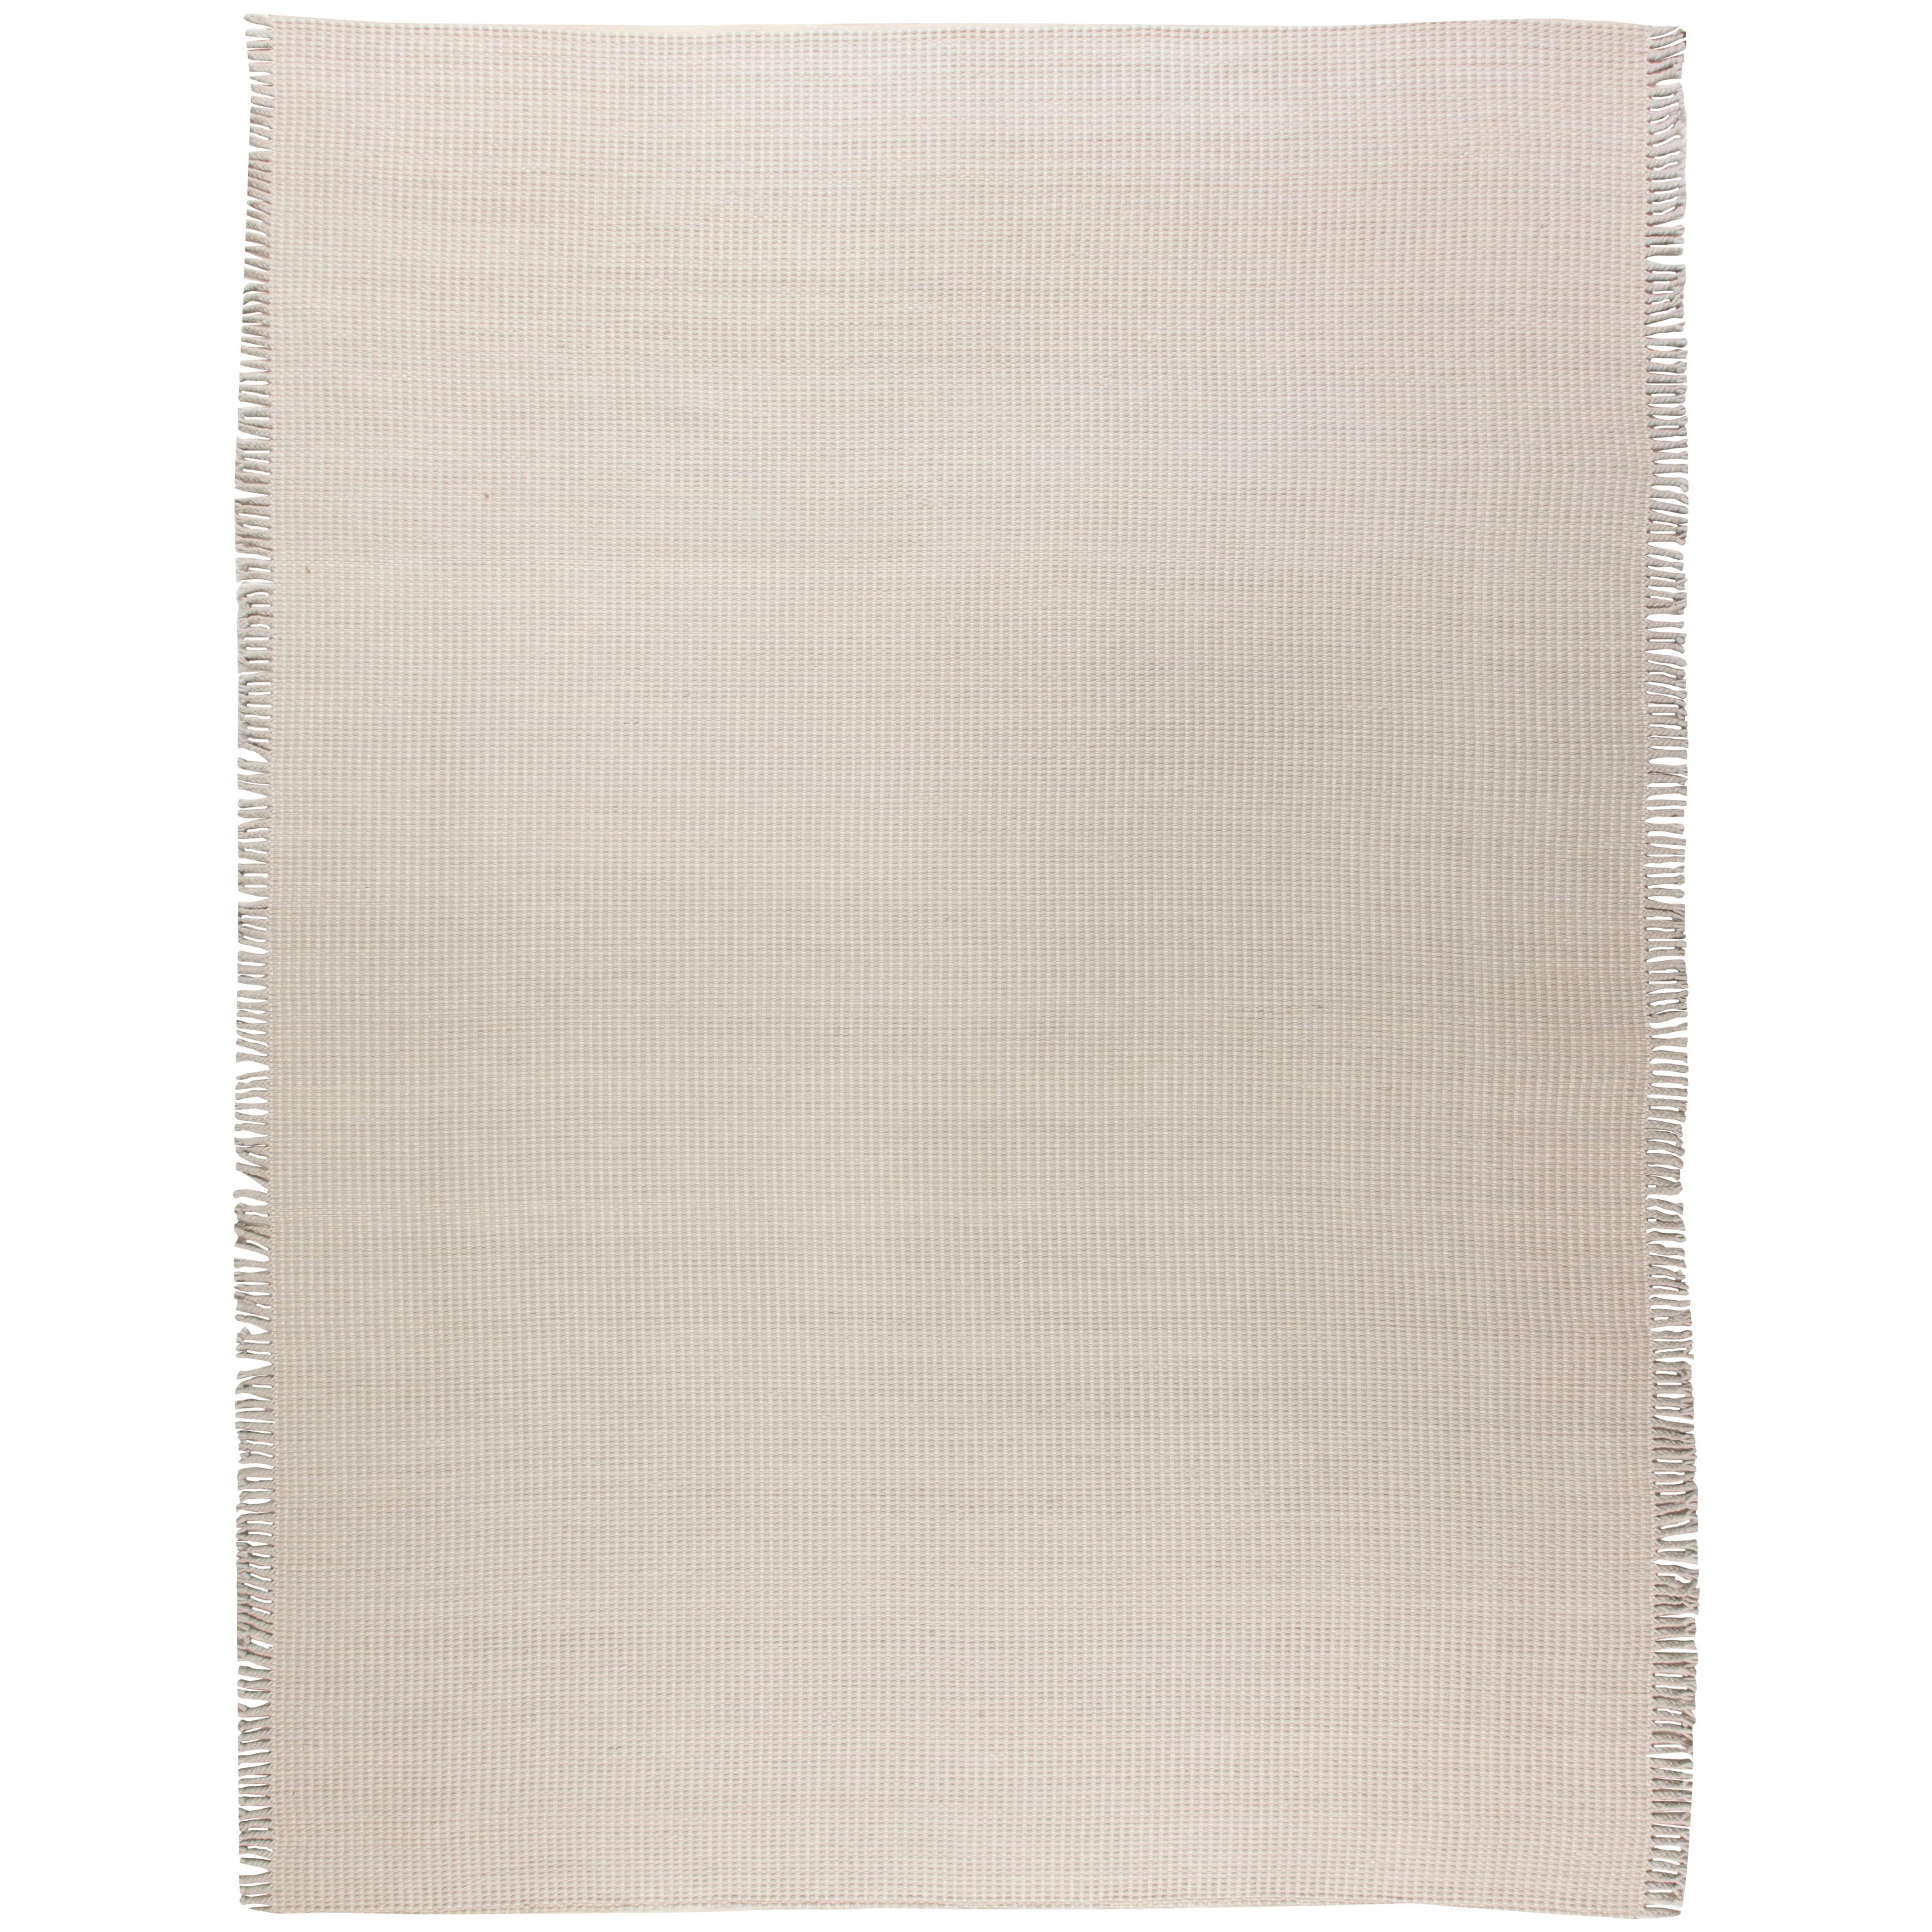 Contemporary Solid Beige and Gray Flat-Weave Wool Rug by Doris Leslie Blau